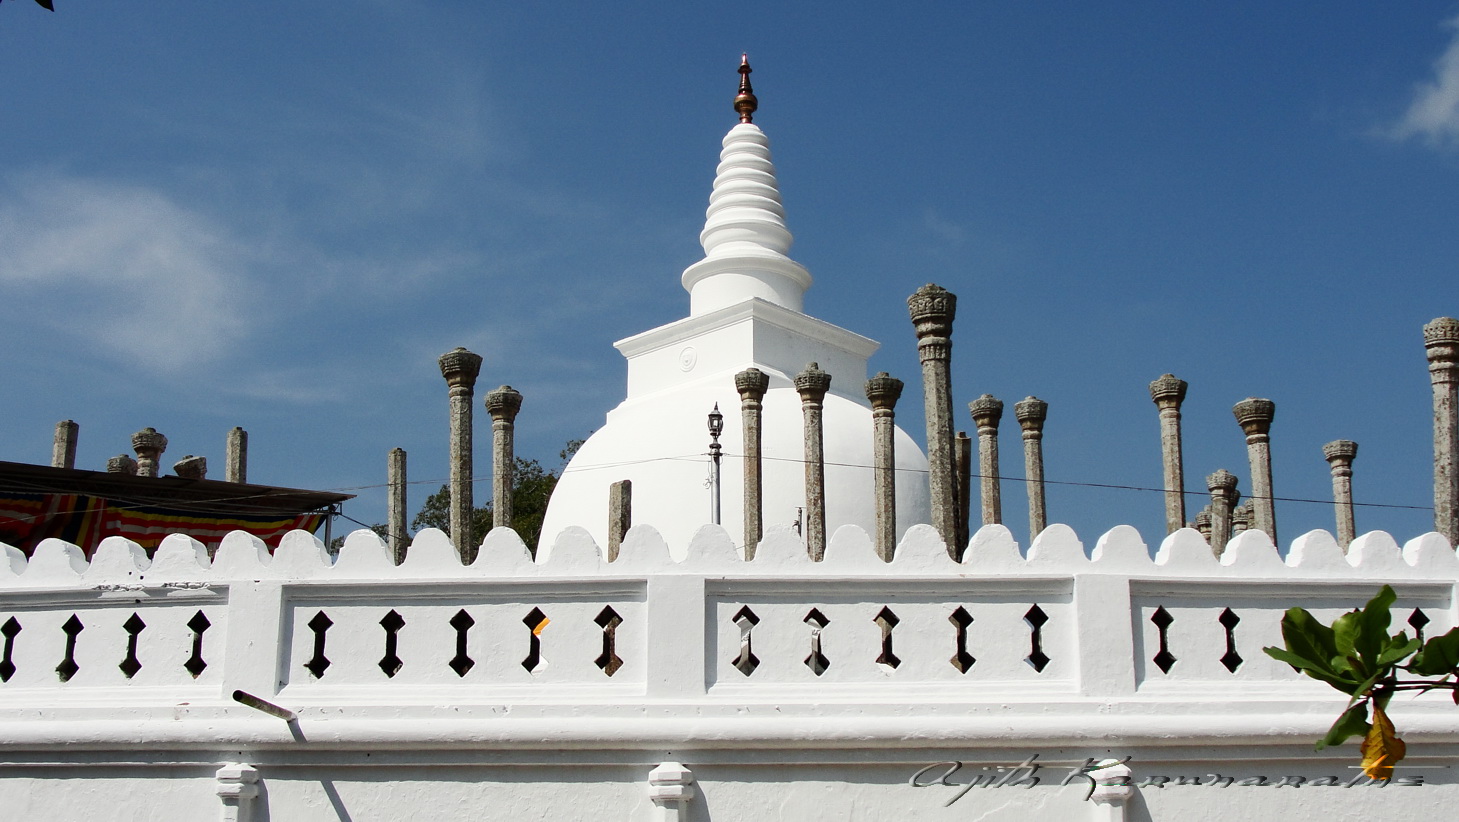 Anuradhapura Thuparamaya